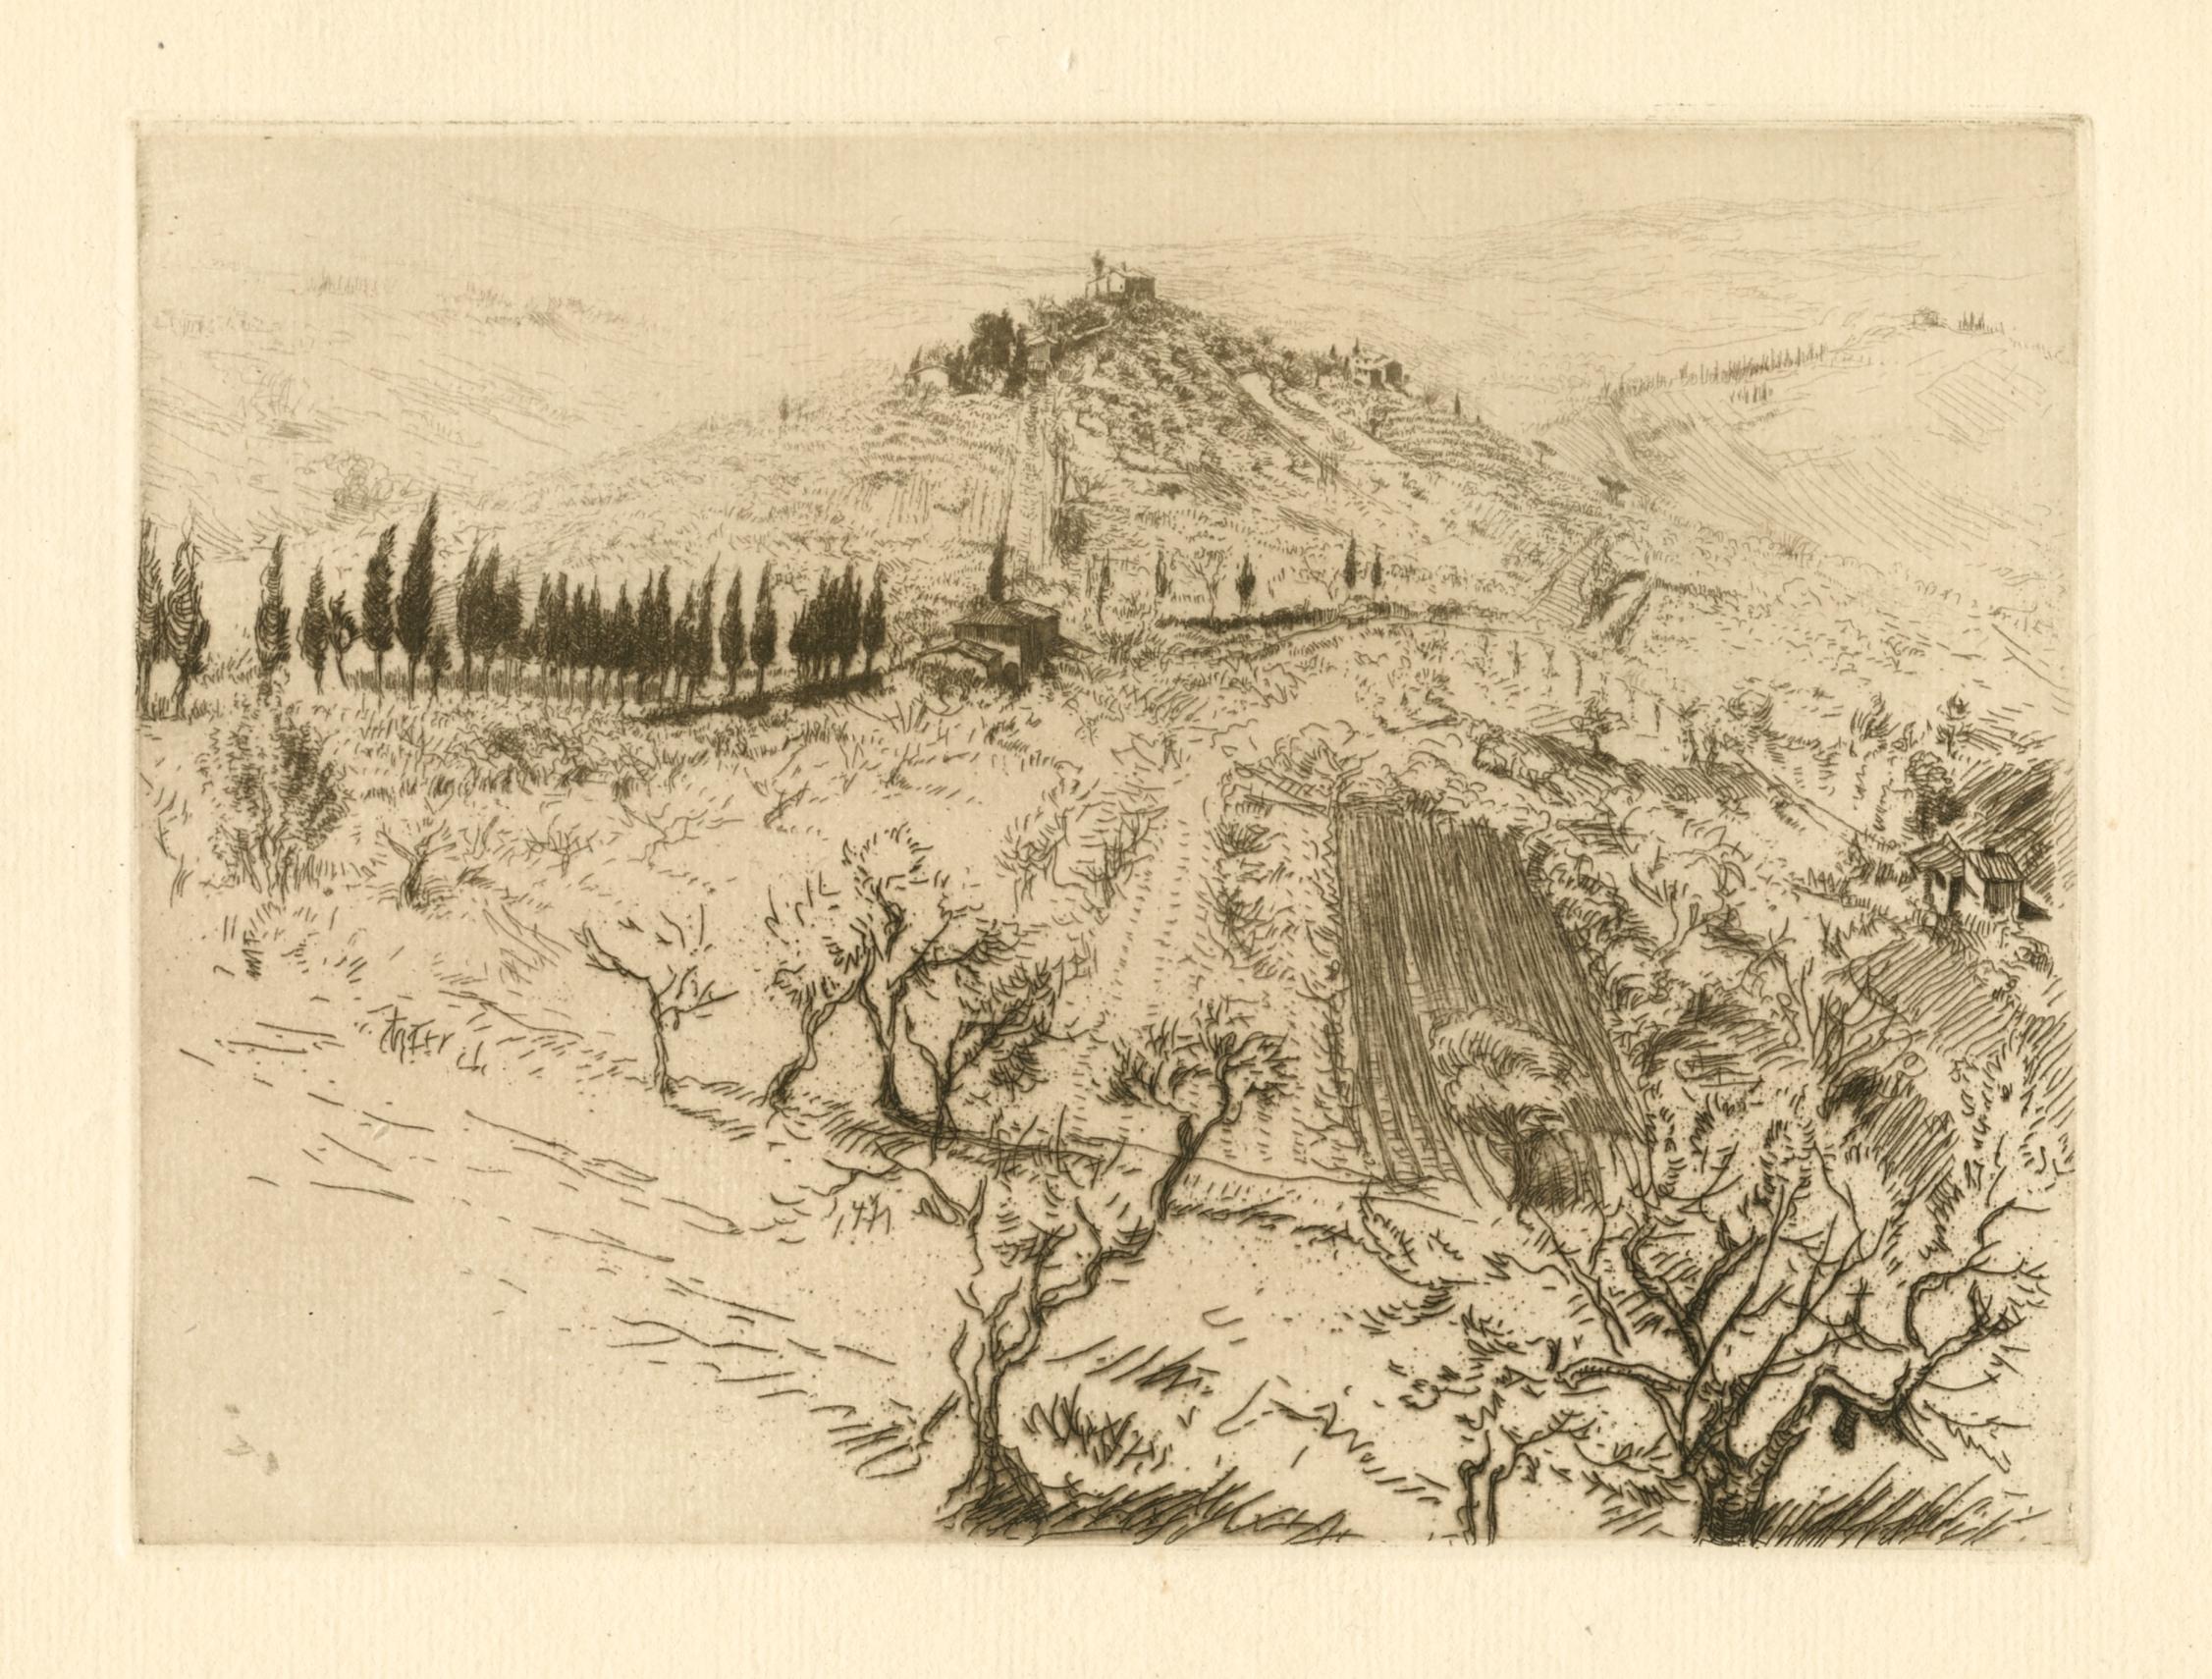 Edgar Chahine Landscape Print - "San Gimignano Colline Poggio" original etching